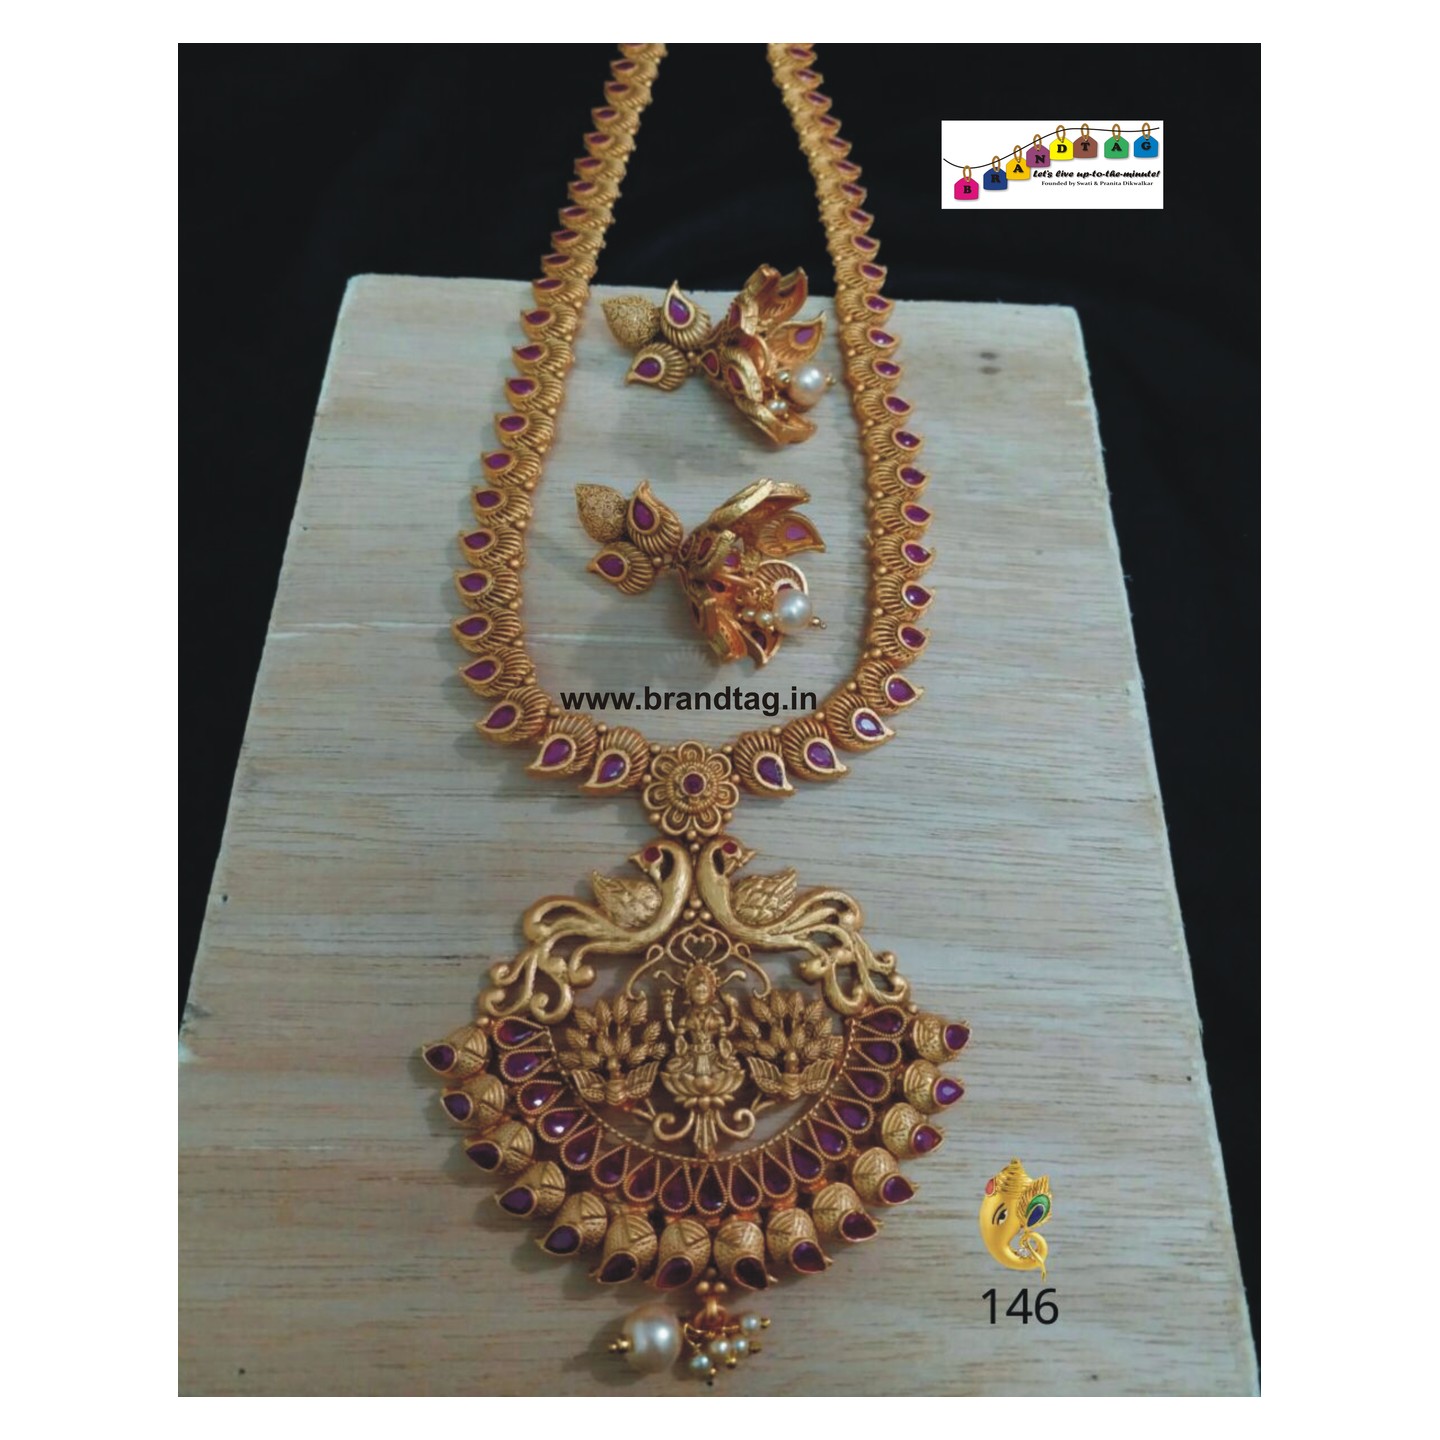 Exquisite Baahubali Divine Temple Long Necklace Set!!! 